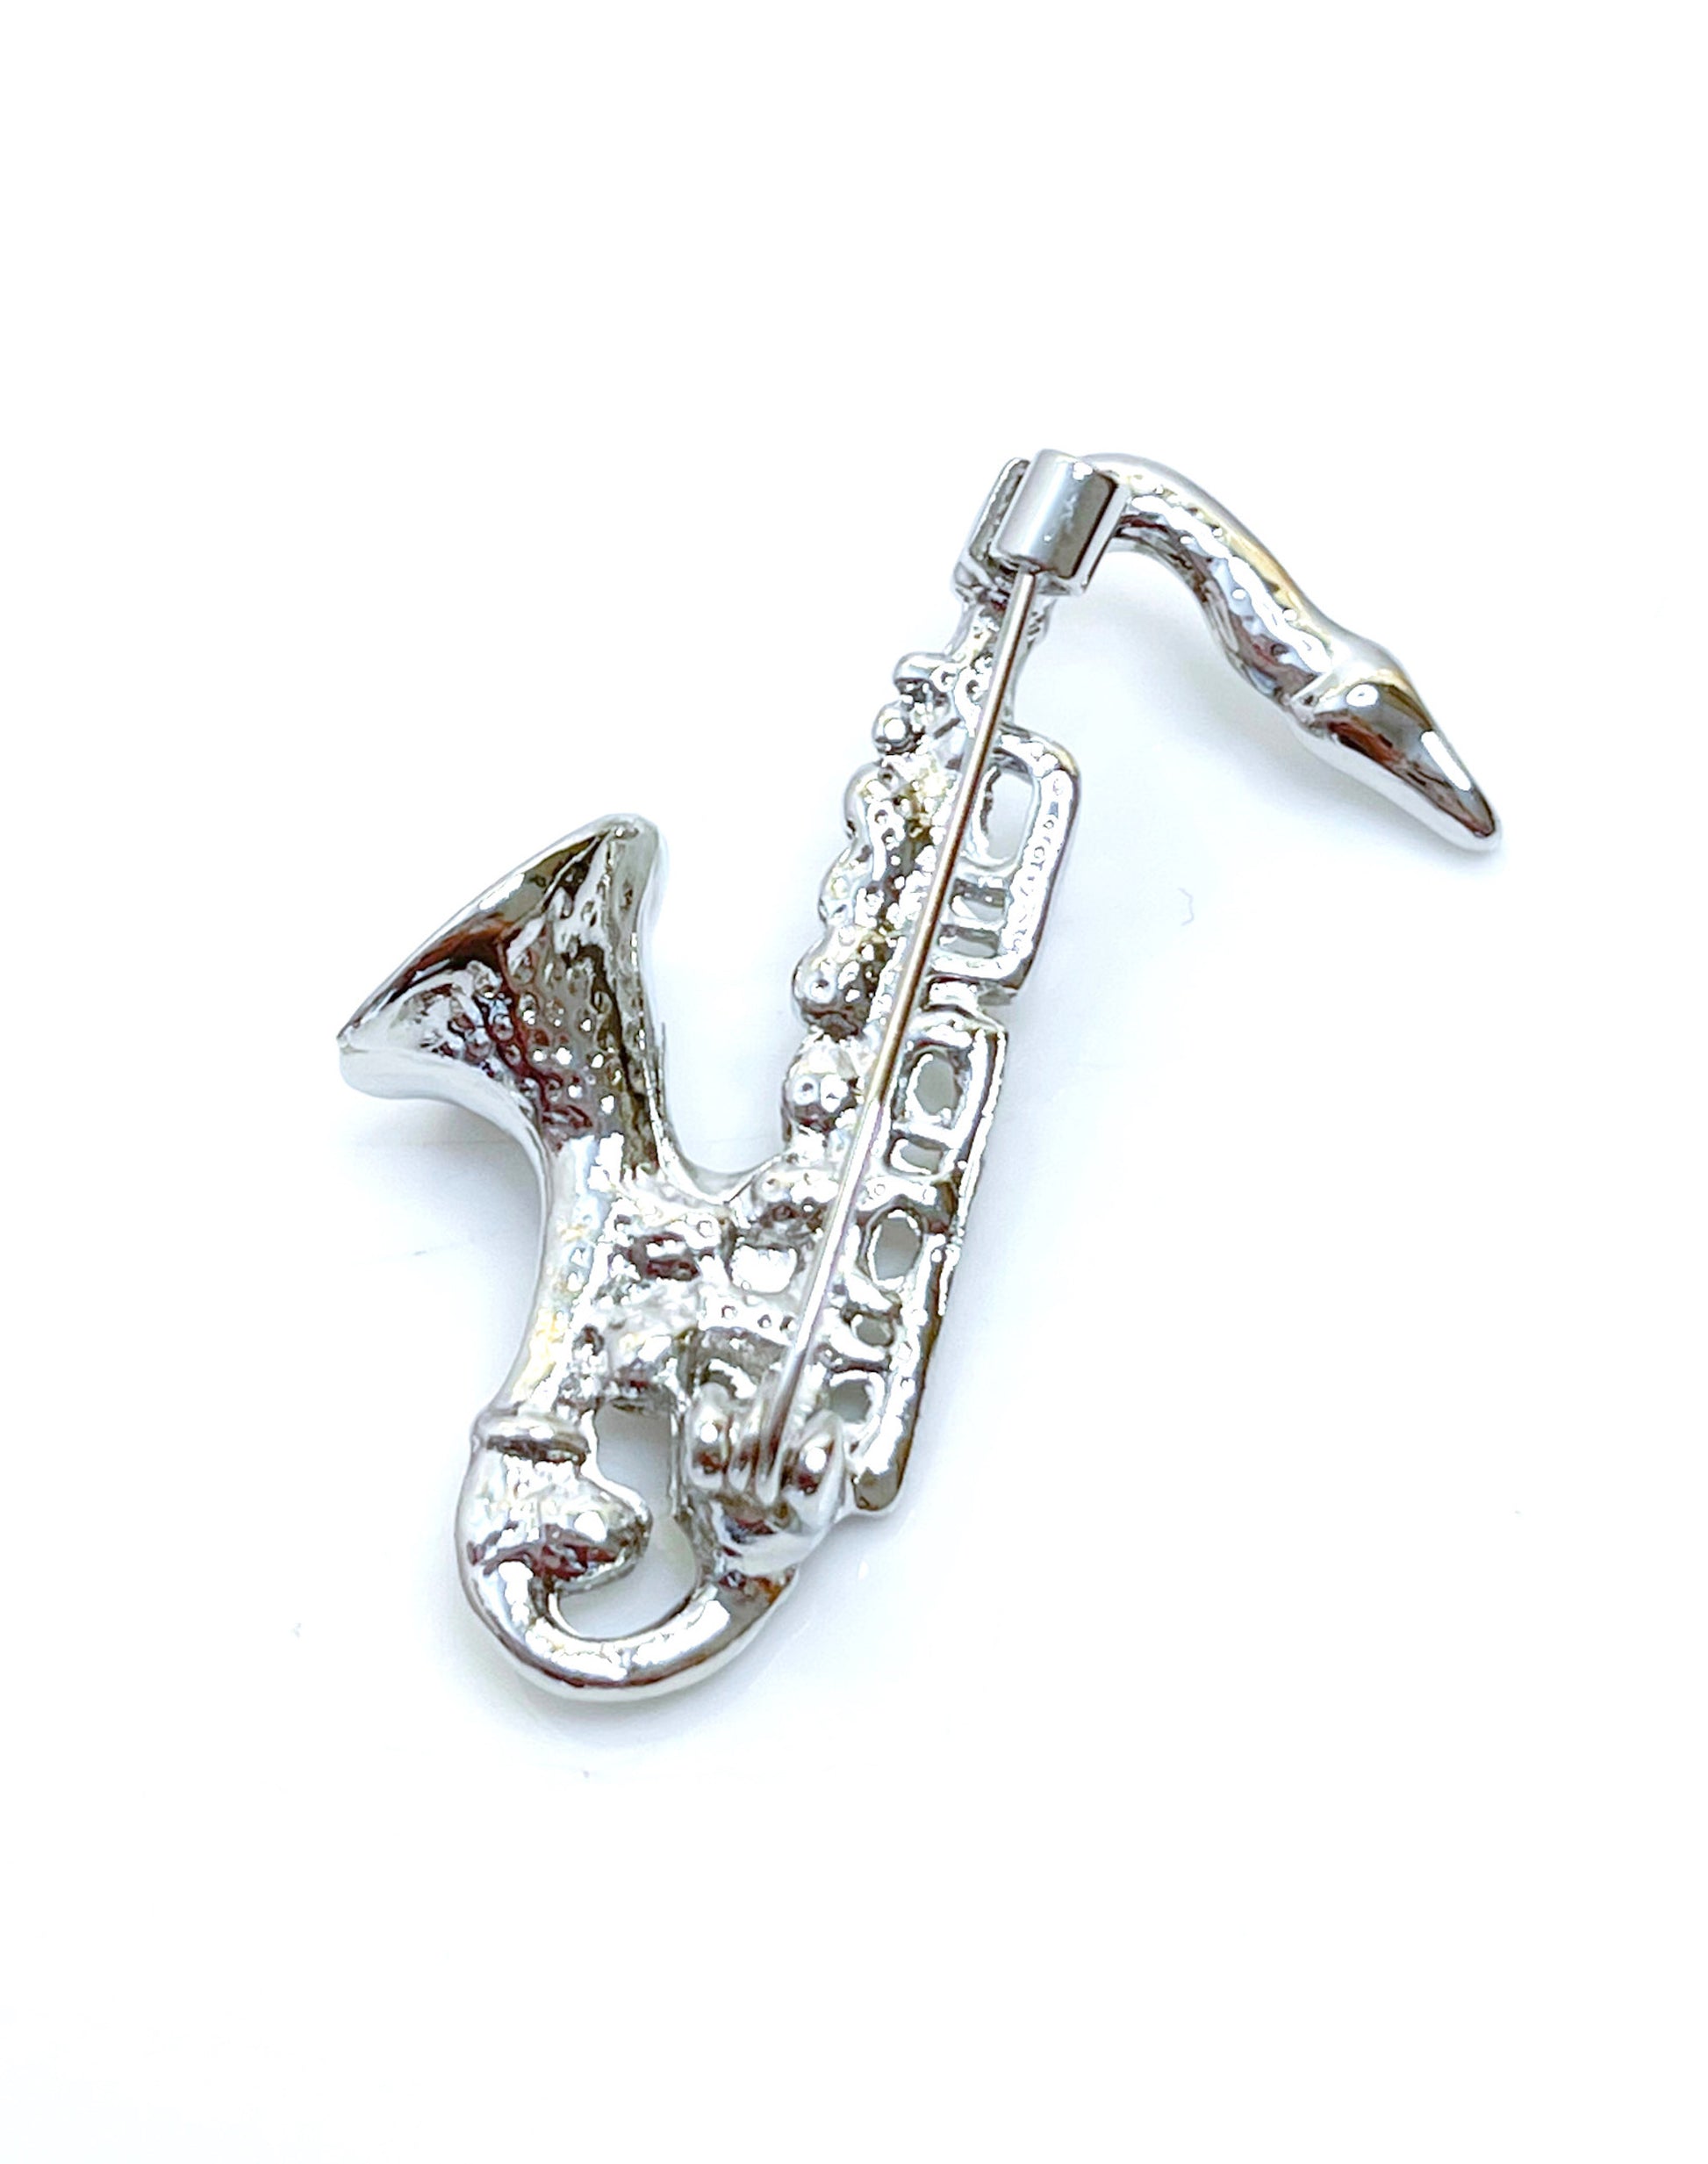 Silver Saxophone Brooch | Unisex Music Lovers Brooch